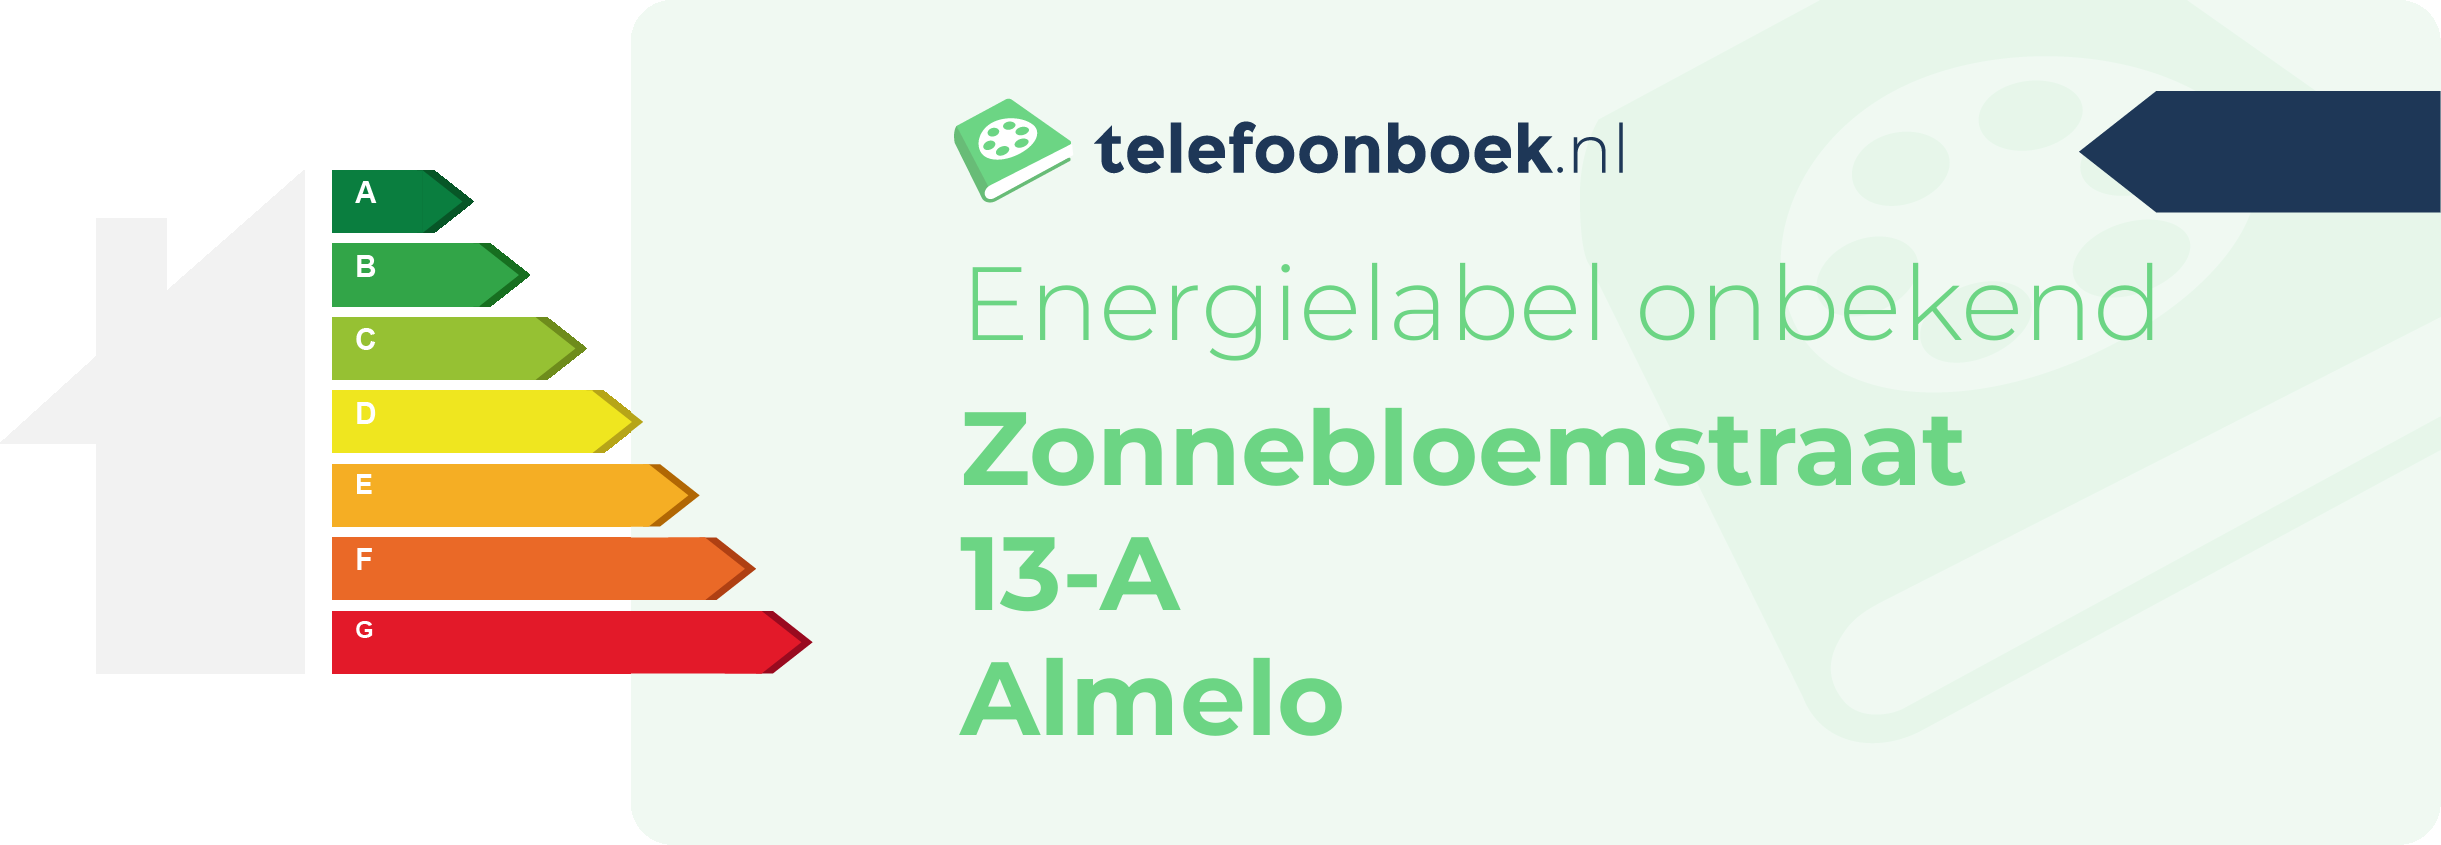 Energielabel Zonnebloemstraat 13-A Almelo